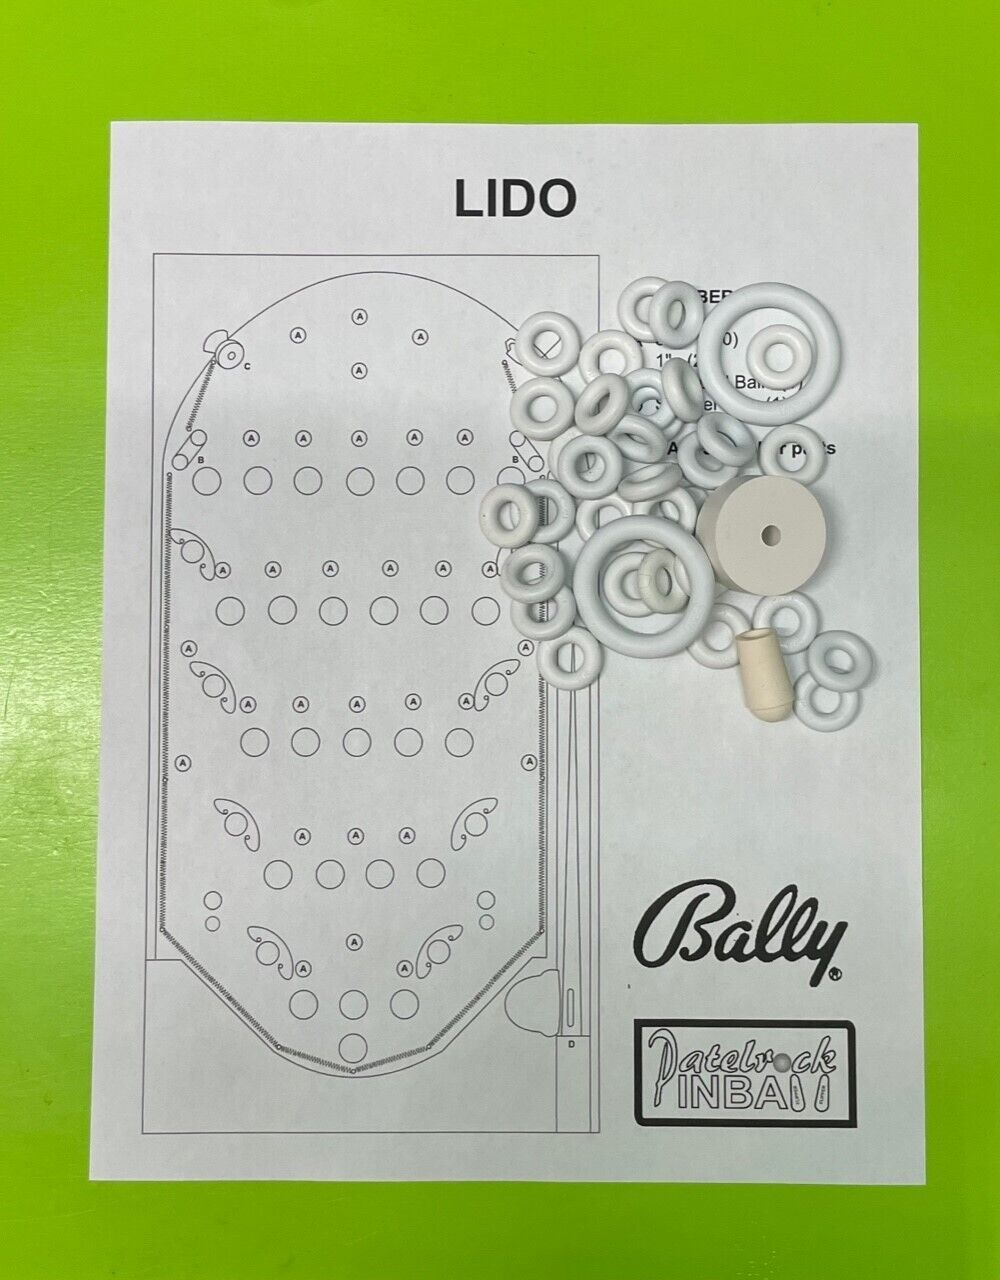 1961 Bally Lido Pinball / Bingo Machine Rubber Ring Kit